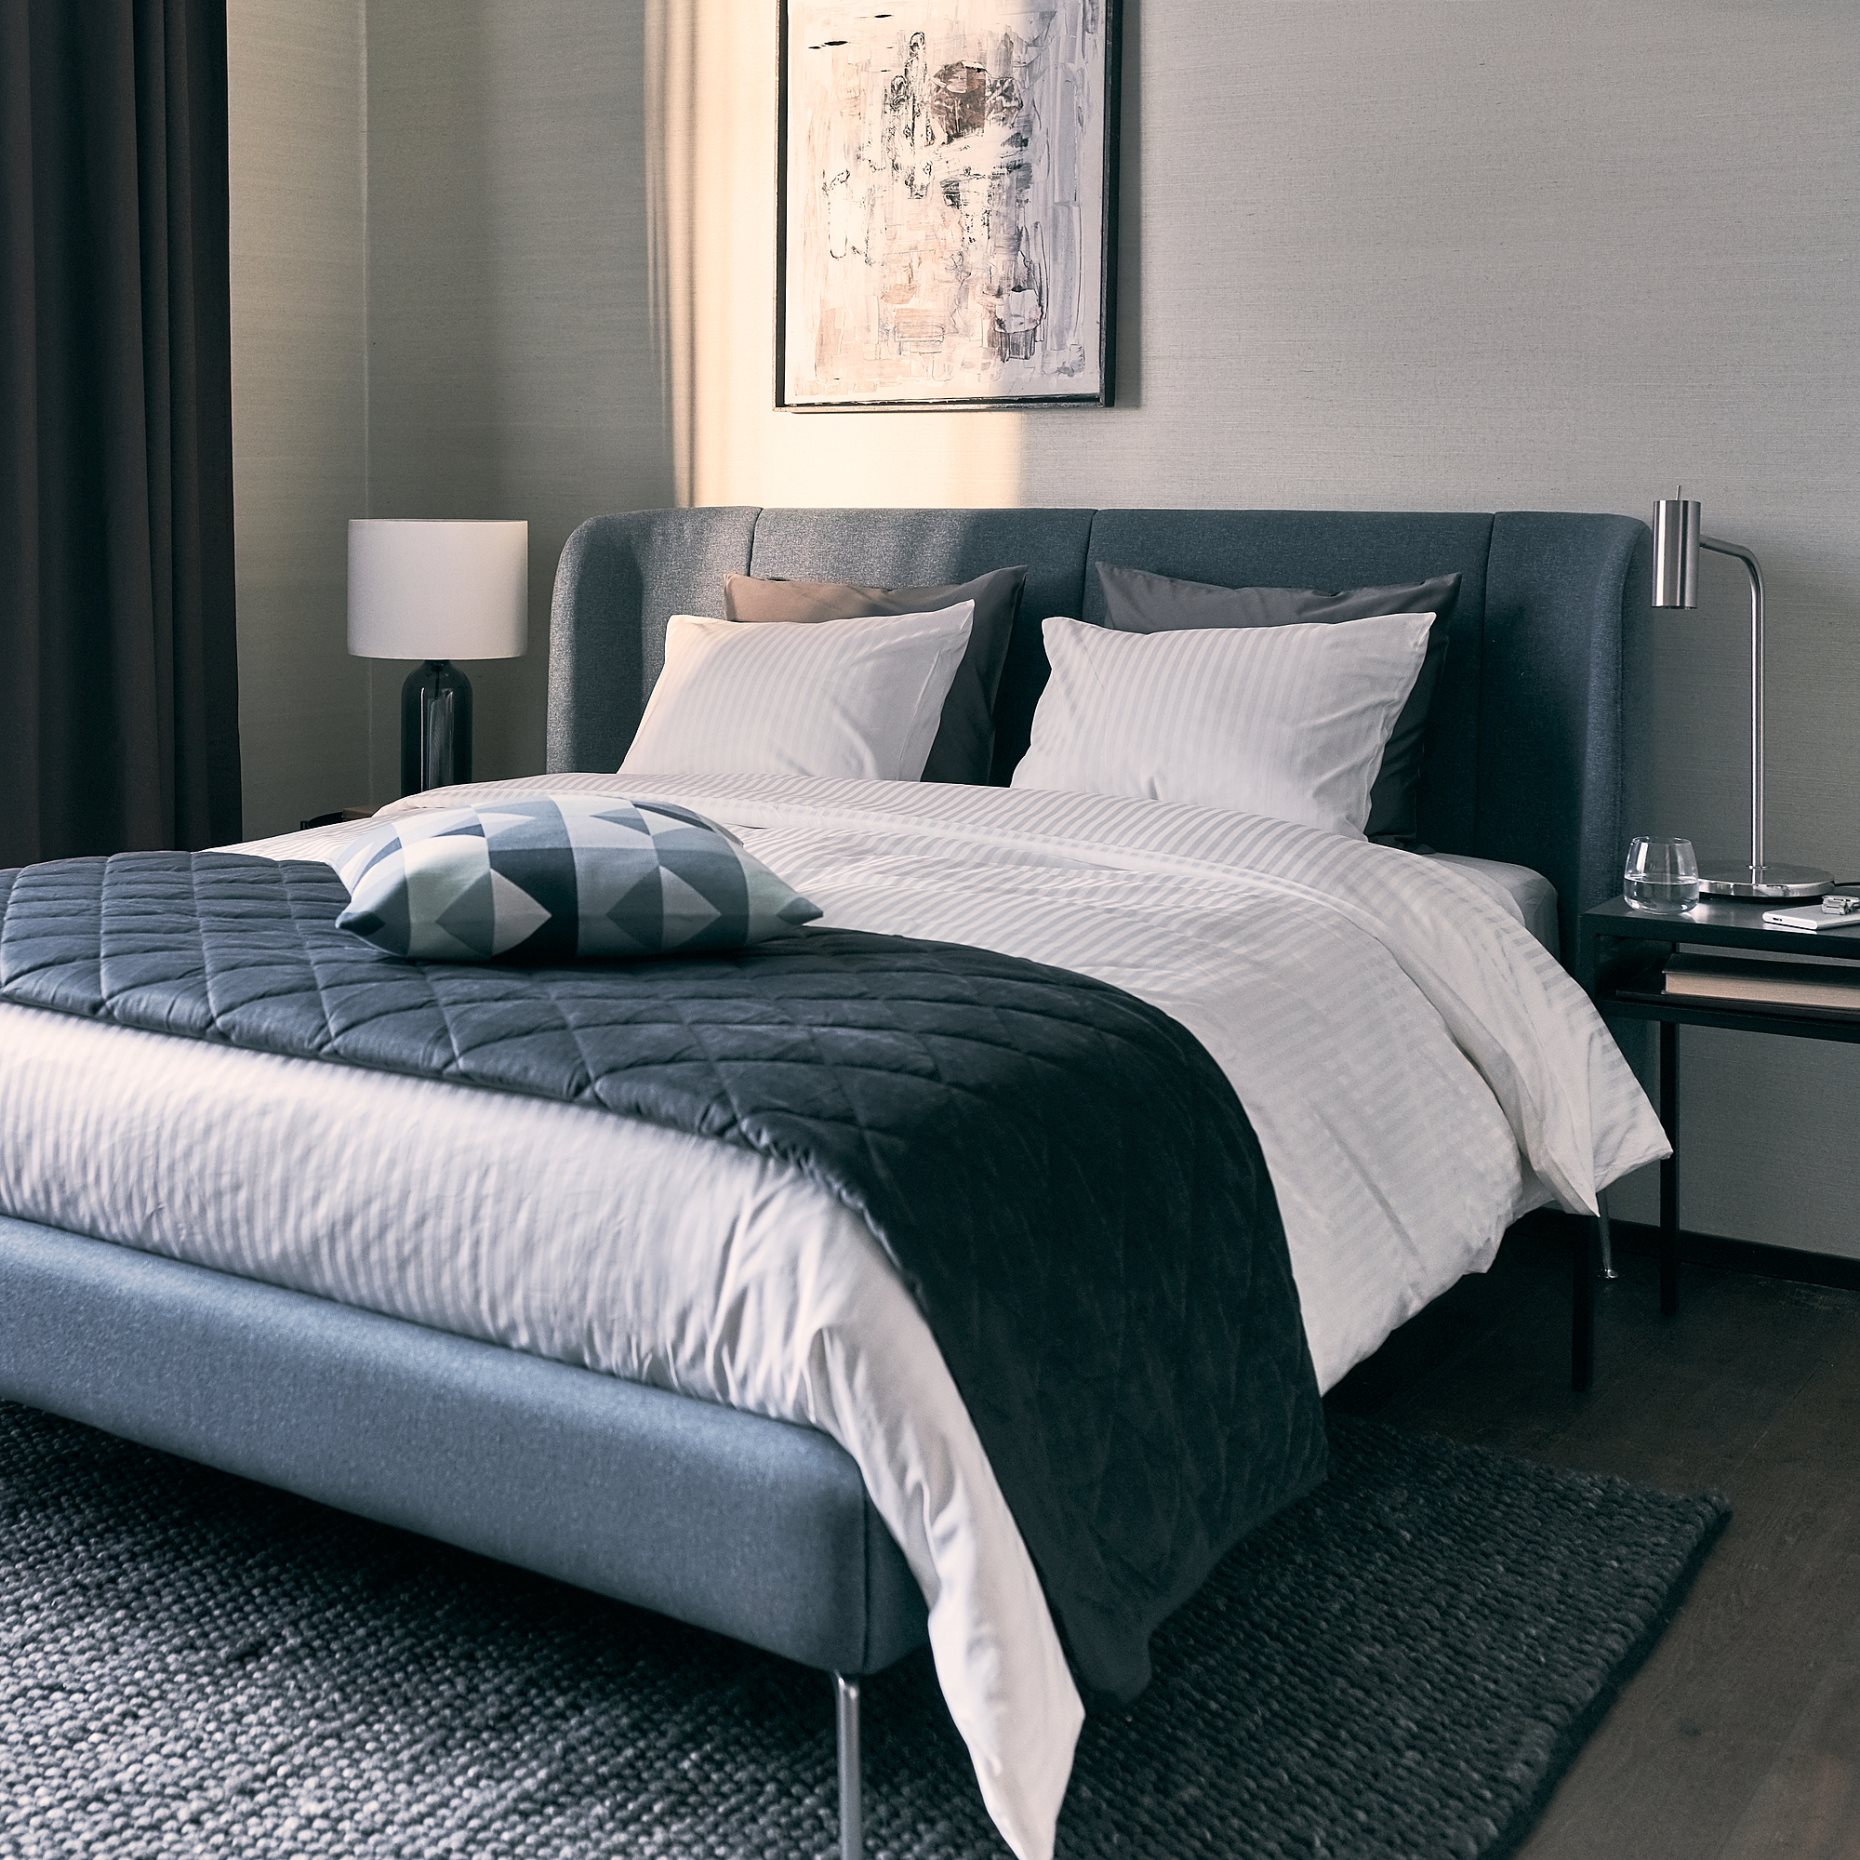 TUFJORD, κρεβάτι με επένδυση, 160x200 cm, 704.464.08